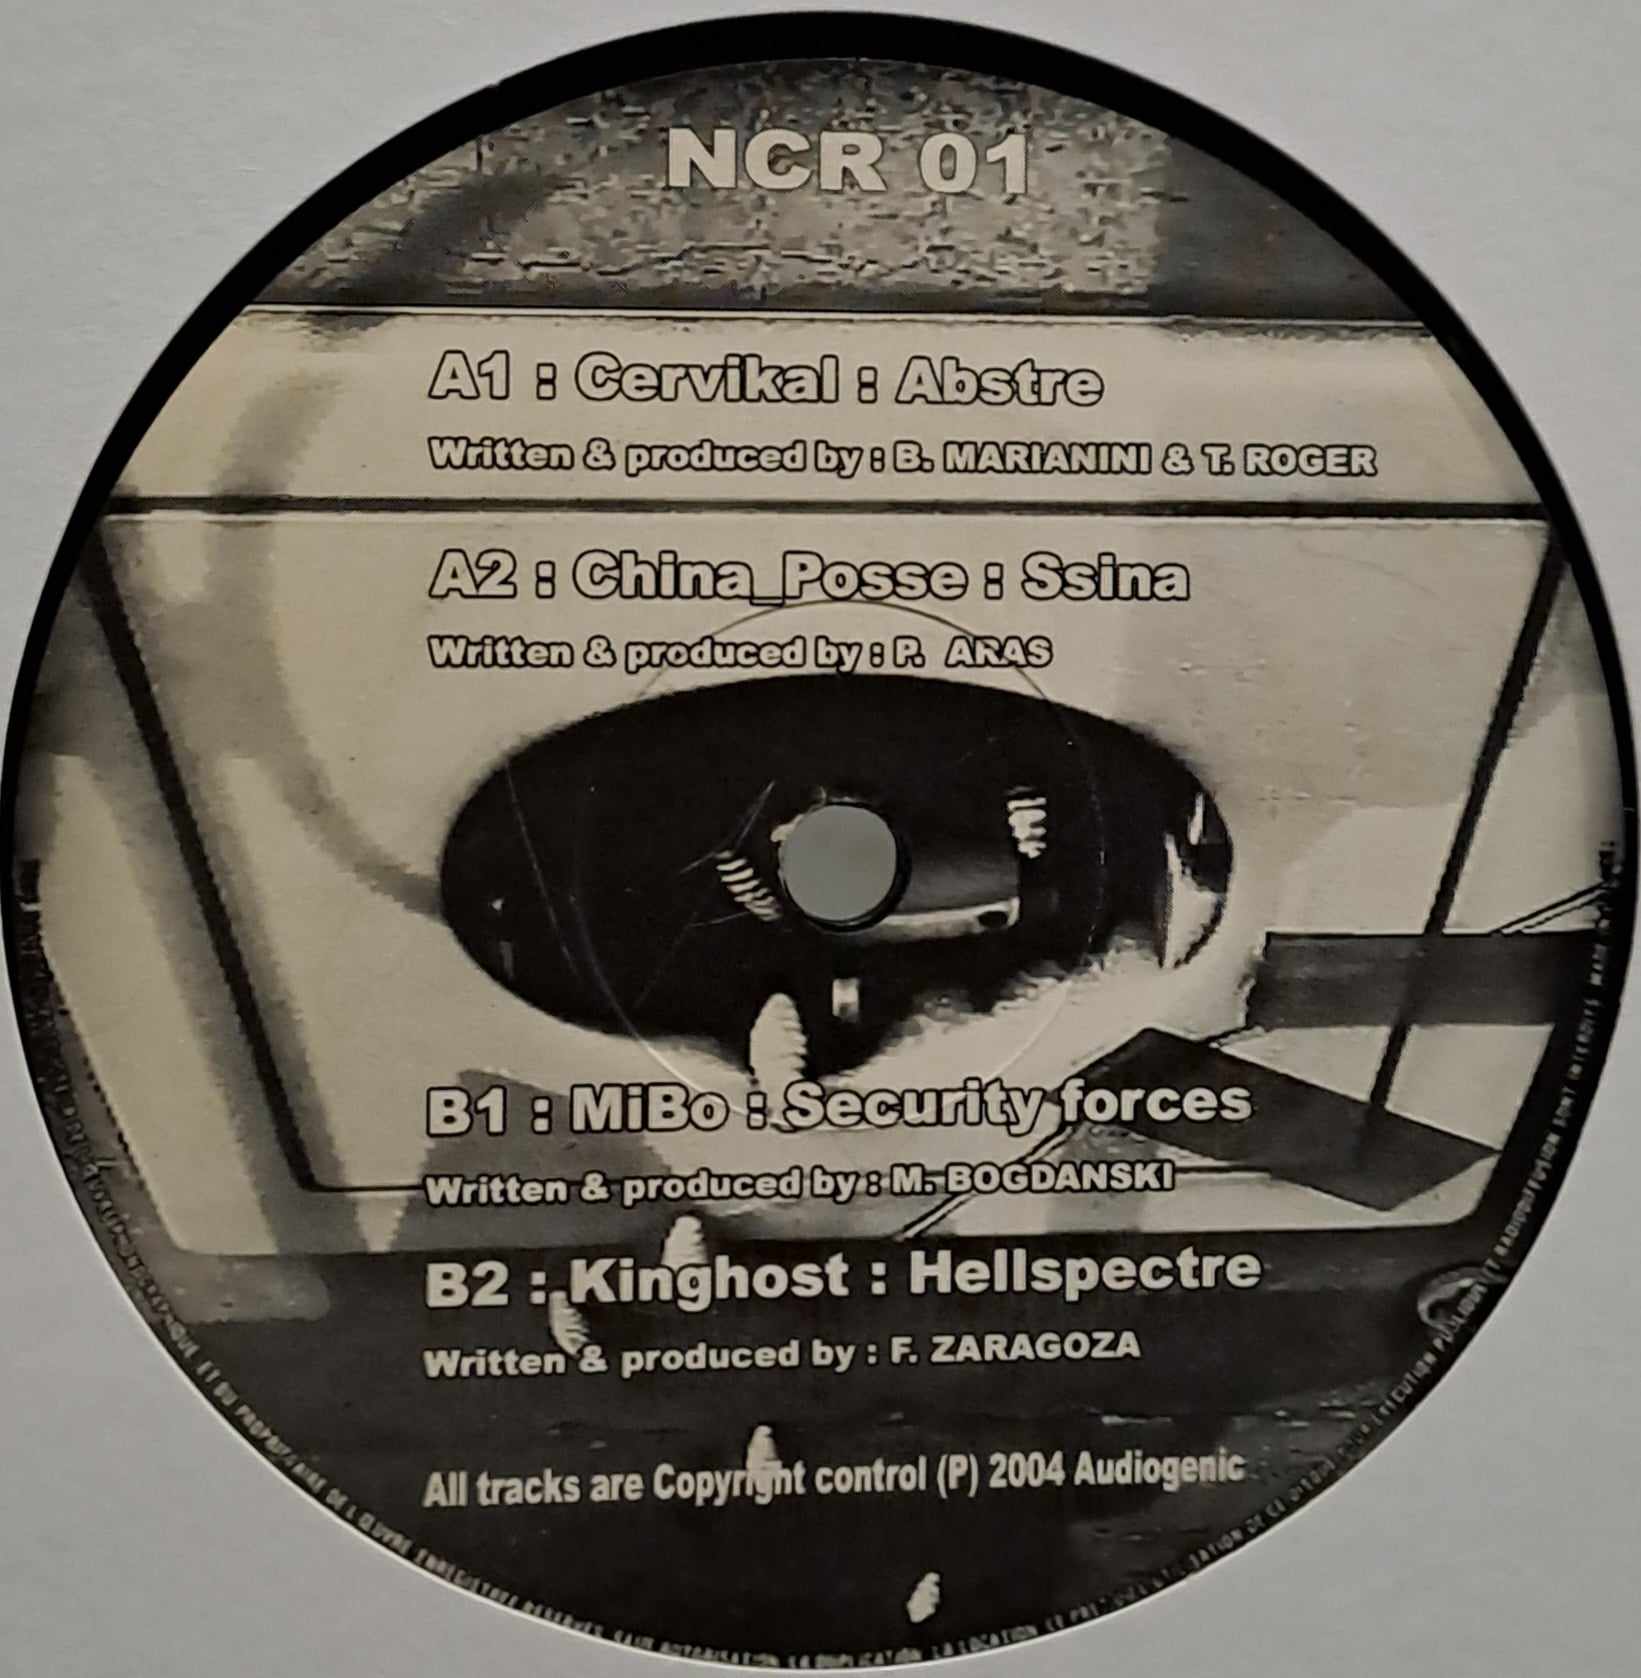 No Core 01 - vinyle hardcore